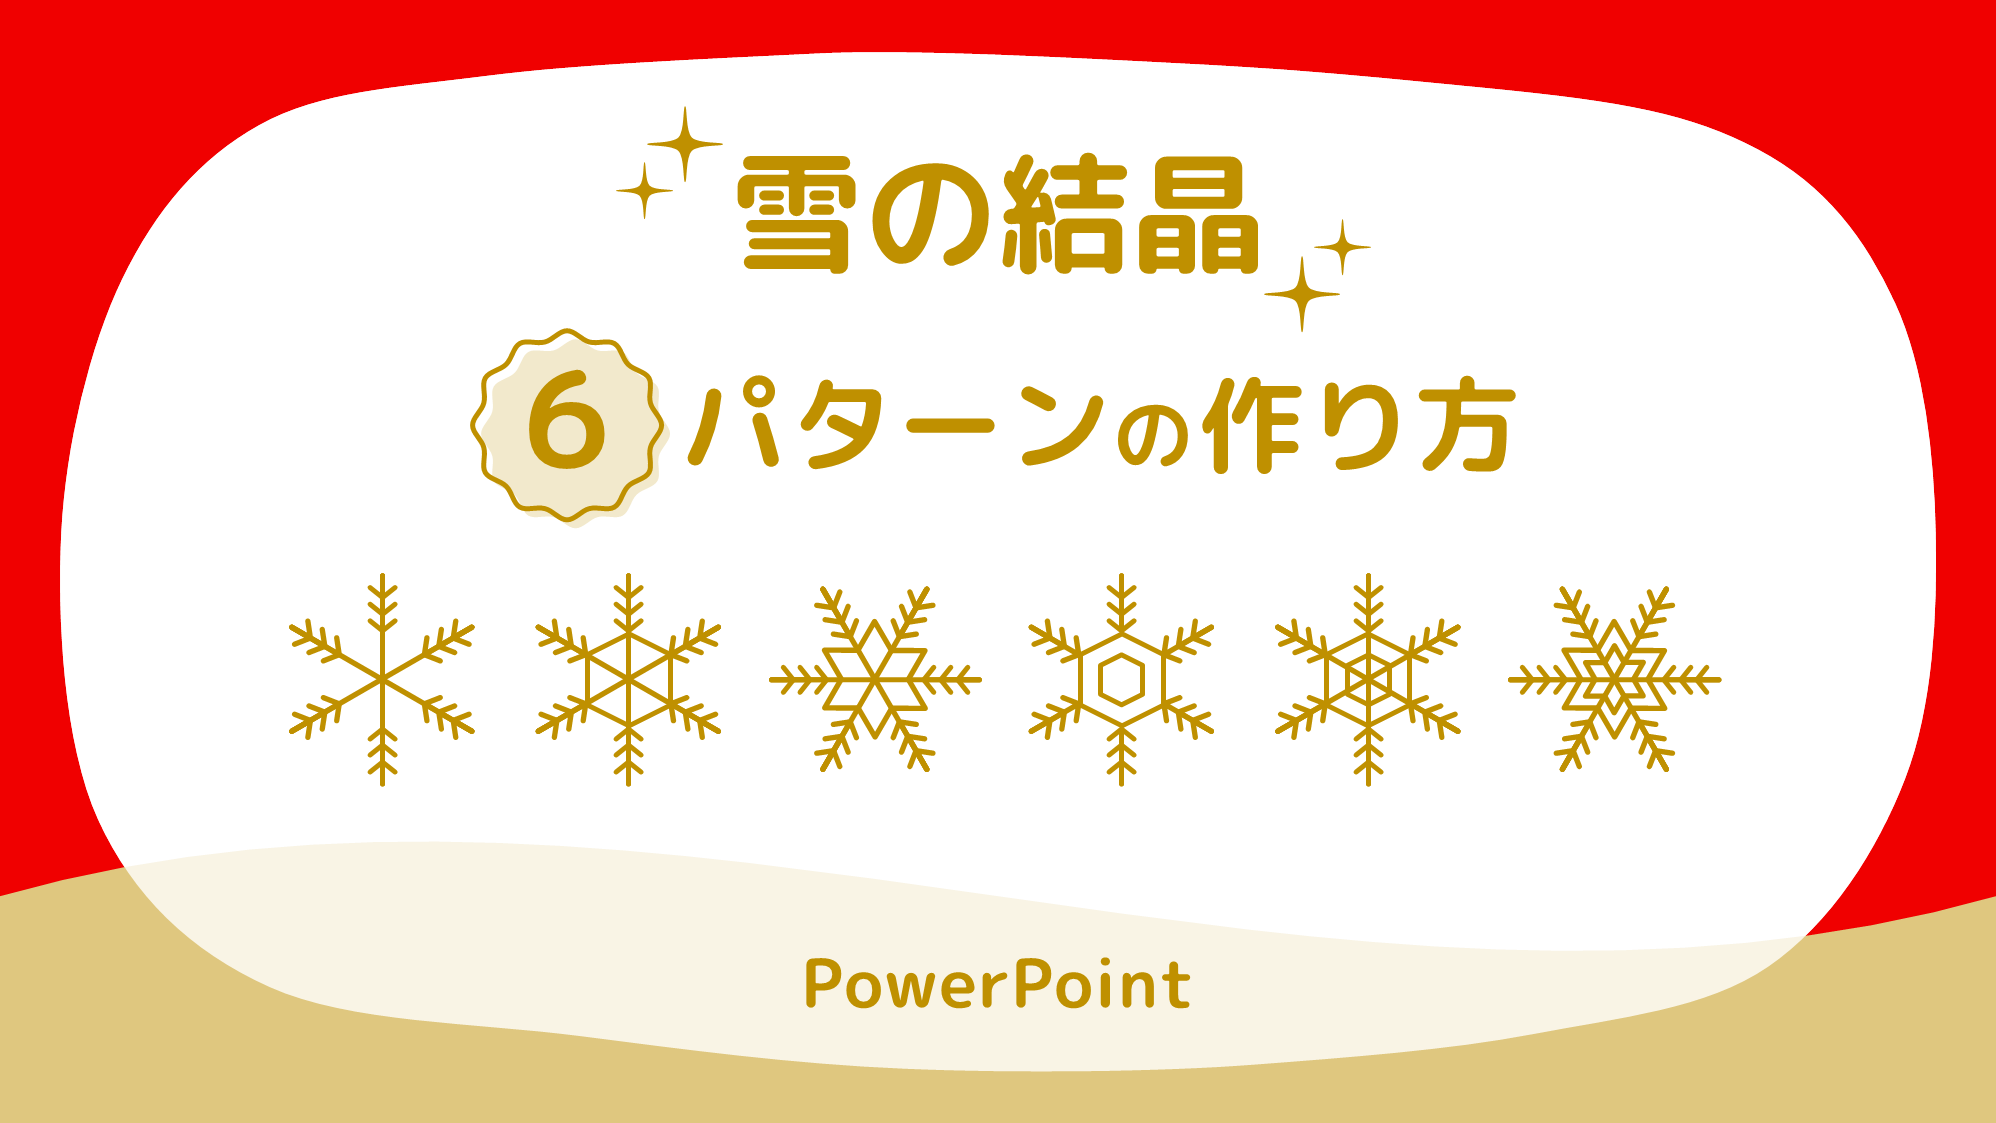 Powerpointで雪の結晶を簡単に6パターン描く方法 Ppdtp